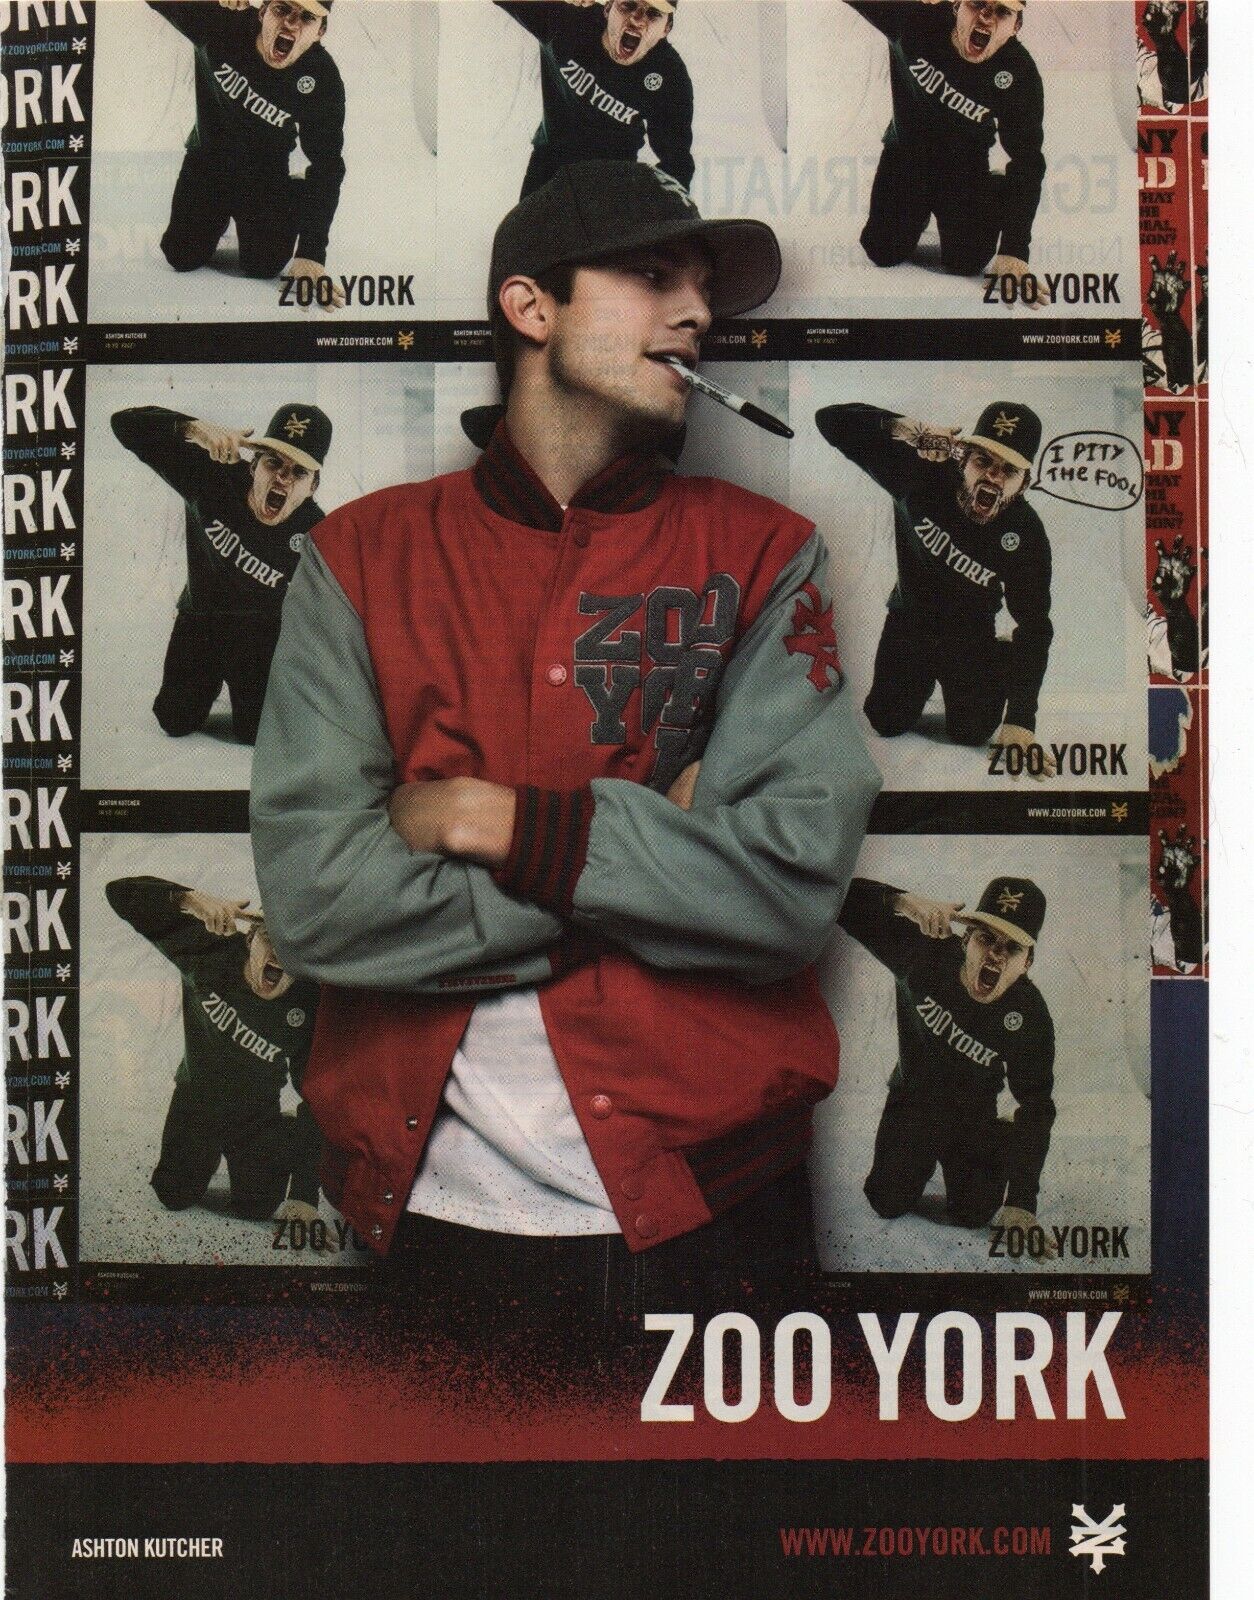 2005 Ashton Kutcher Zoo York Print Ad Official Skateboard Clothing Promo